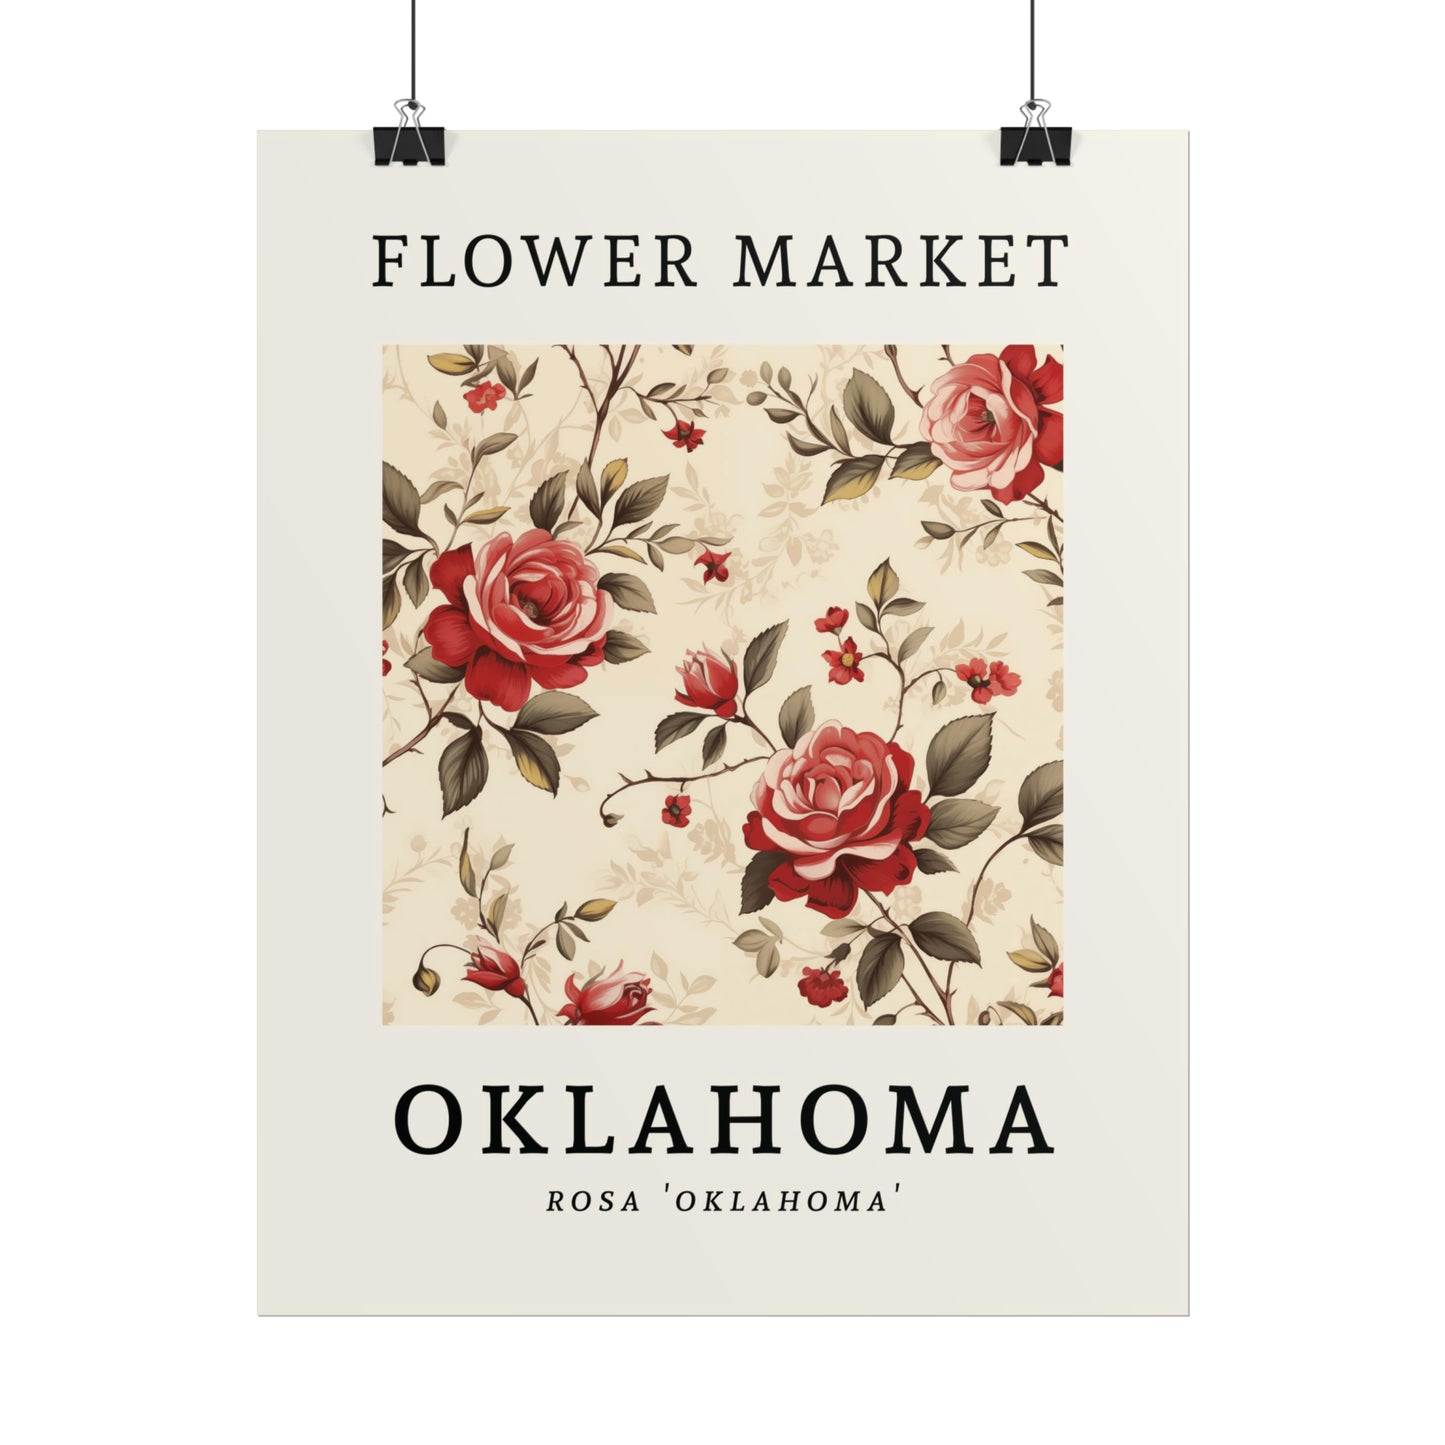 OKLAHOMA FLOWER MARKET Poster Oklahoma Rose Blossoms Print